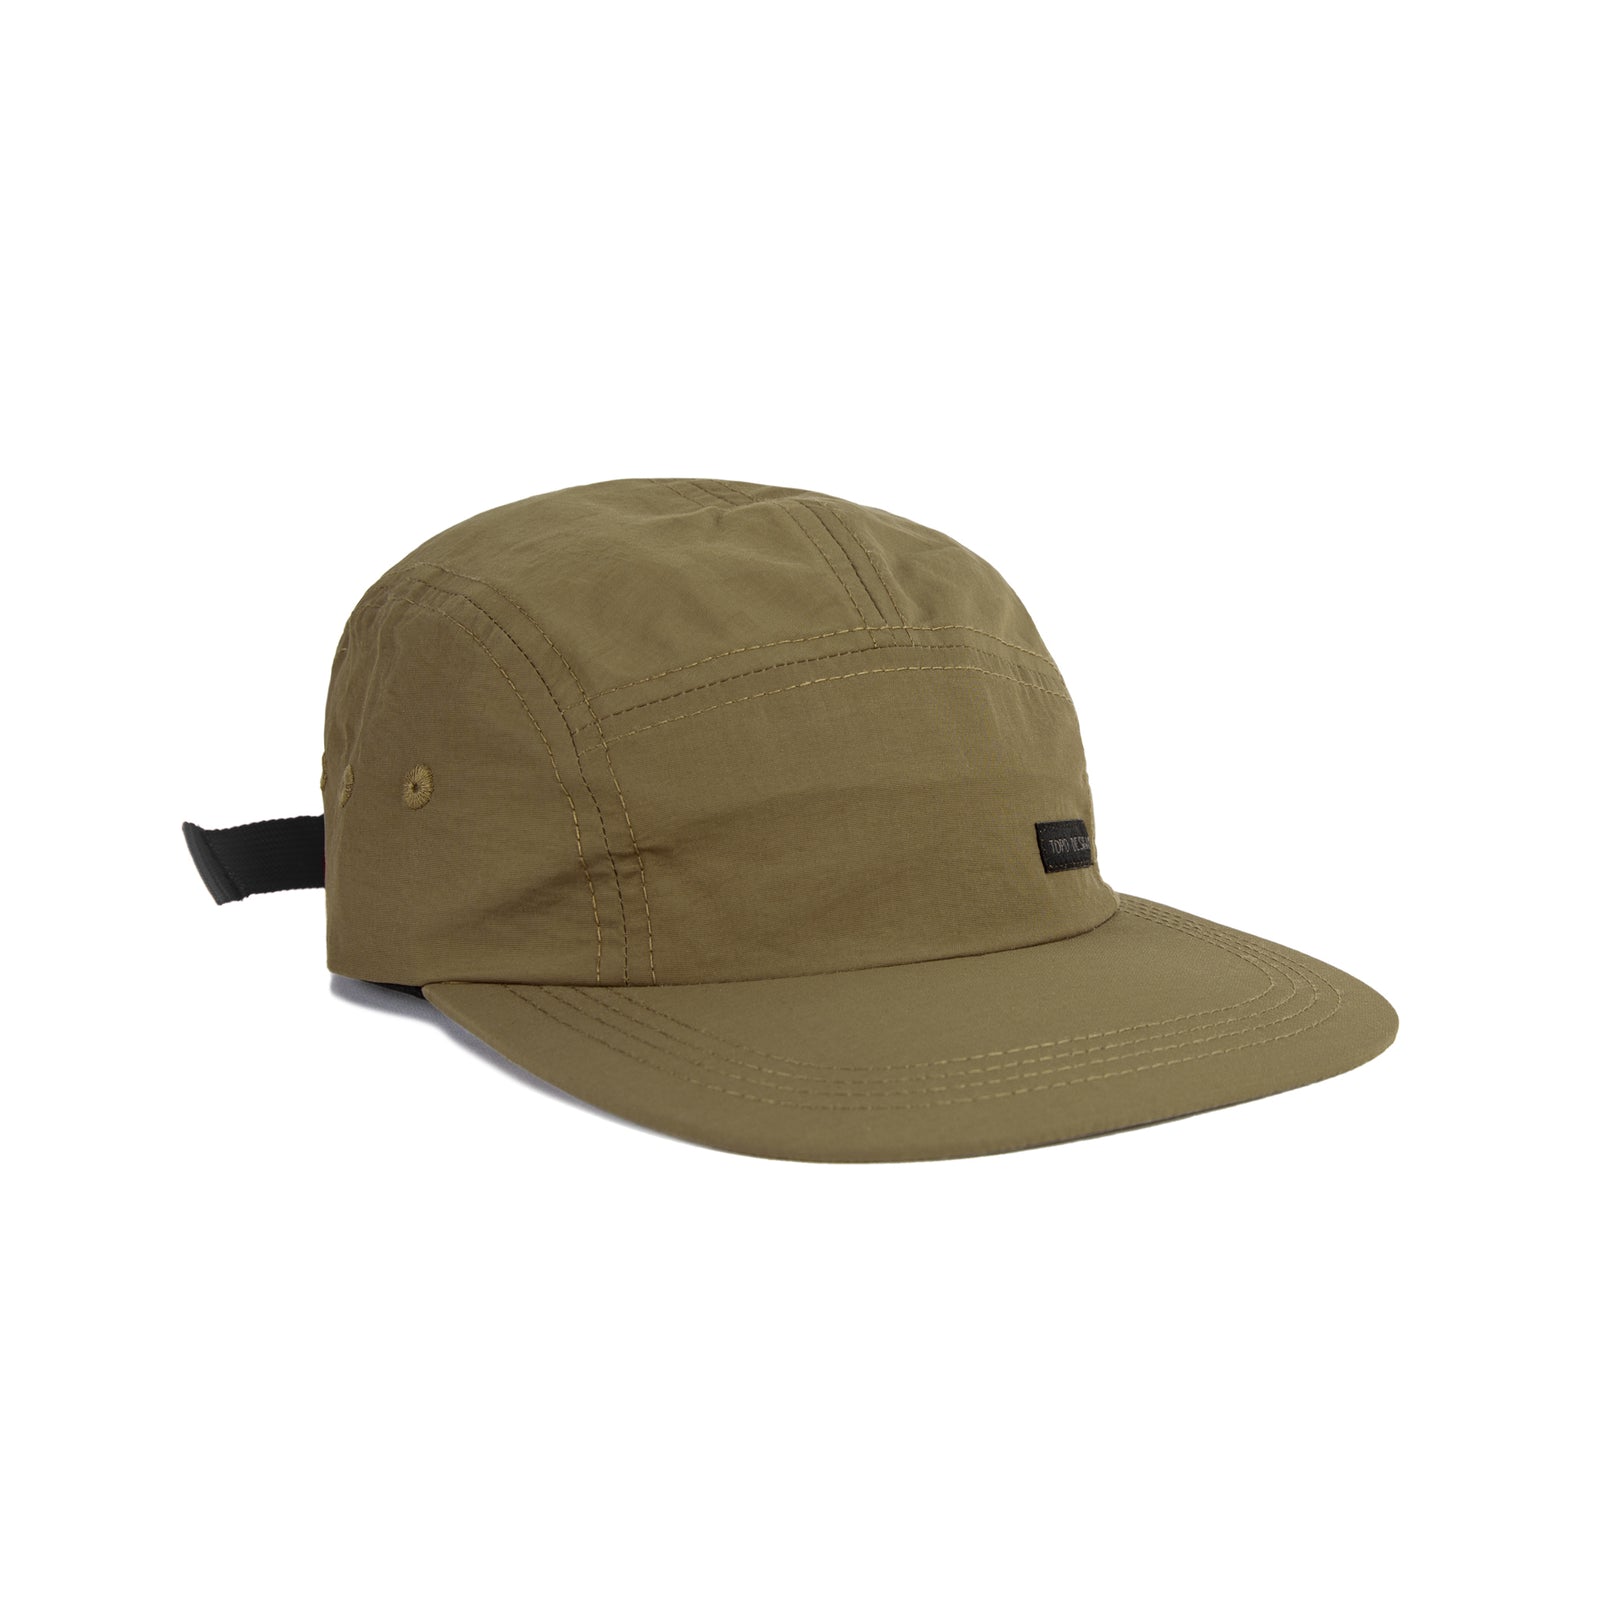 Topo Designs Nylon Camp 5-panel flat brim Hat in "Dark Terra" brownish green.